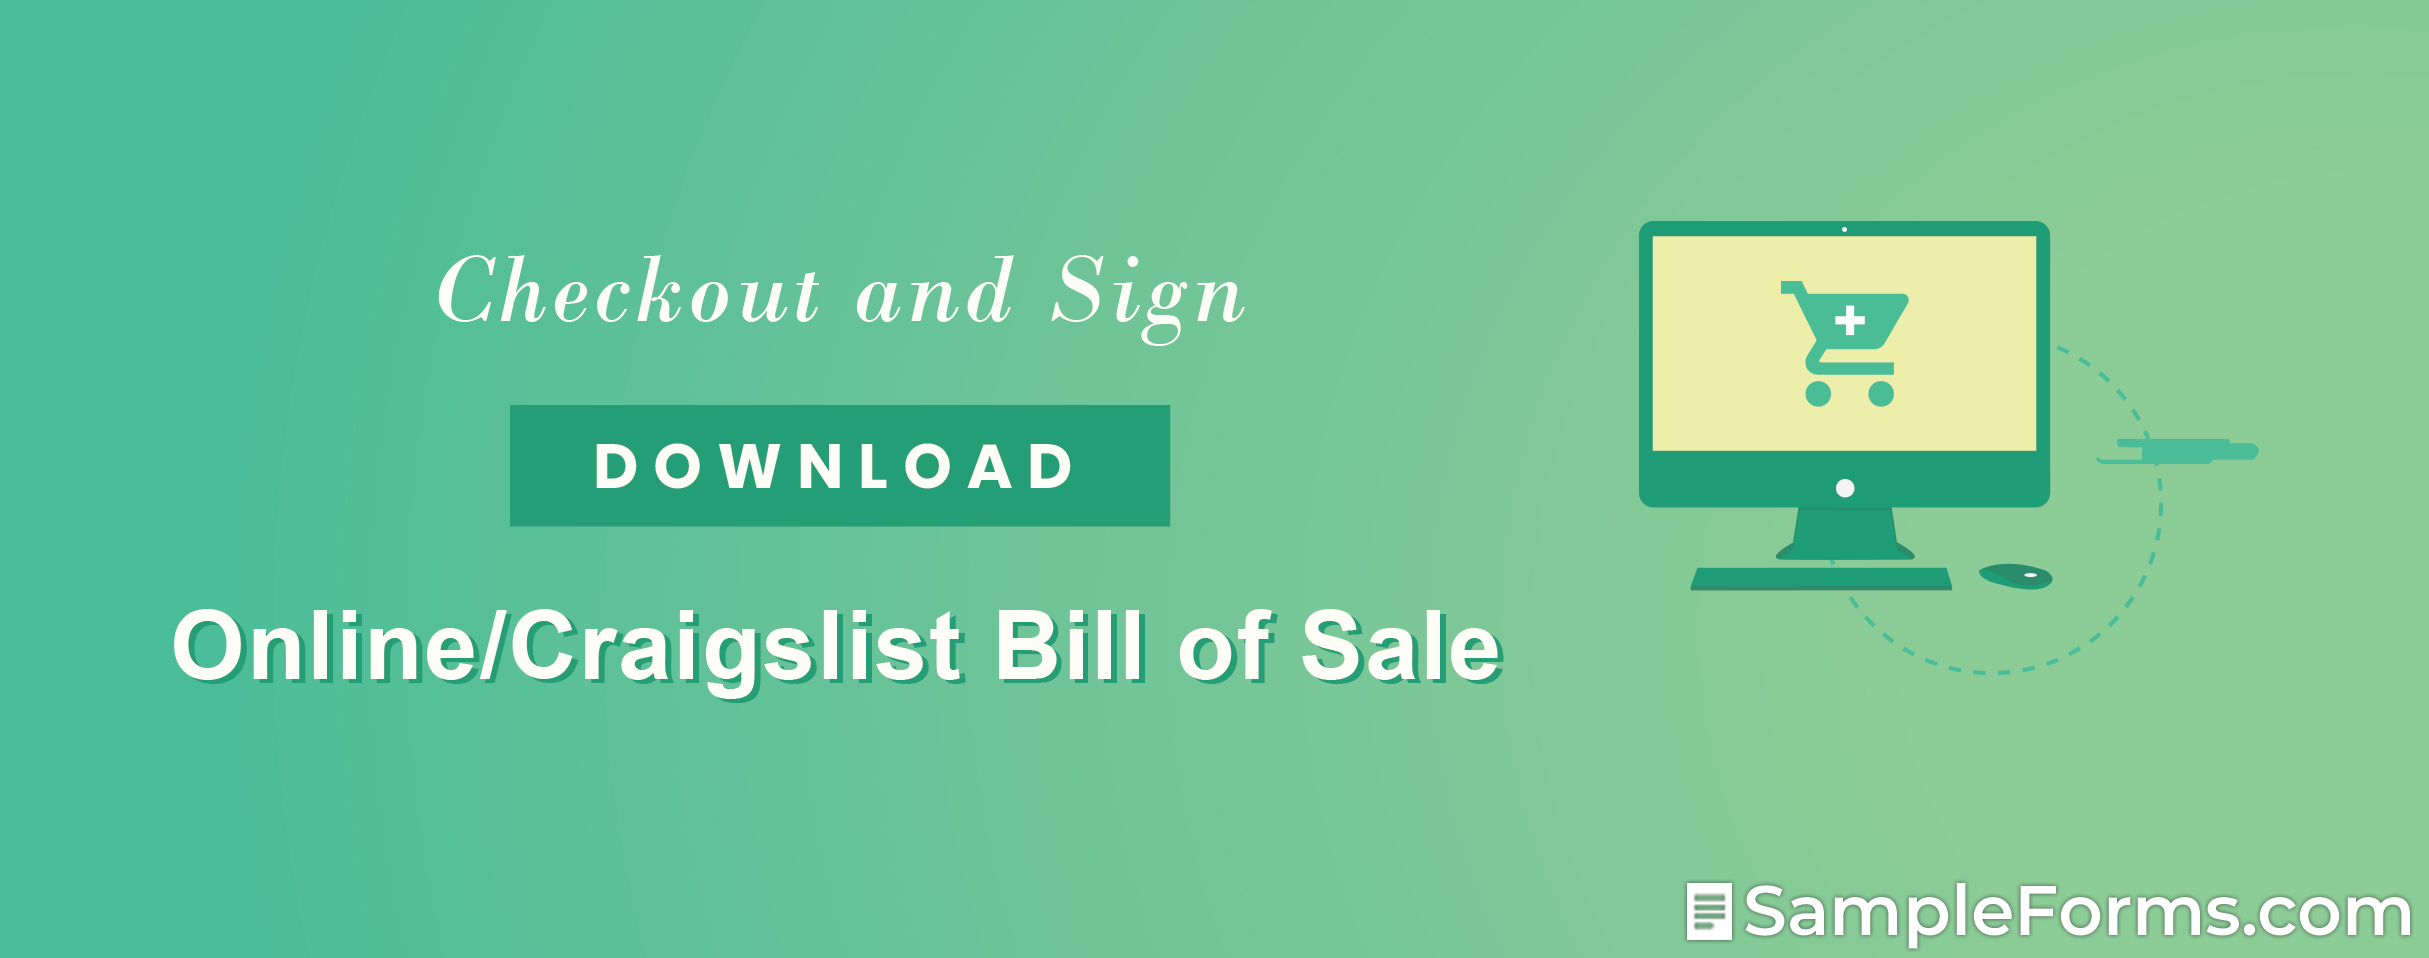 Online Craigslist Bill of Sale